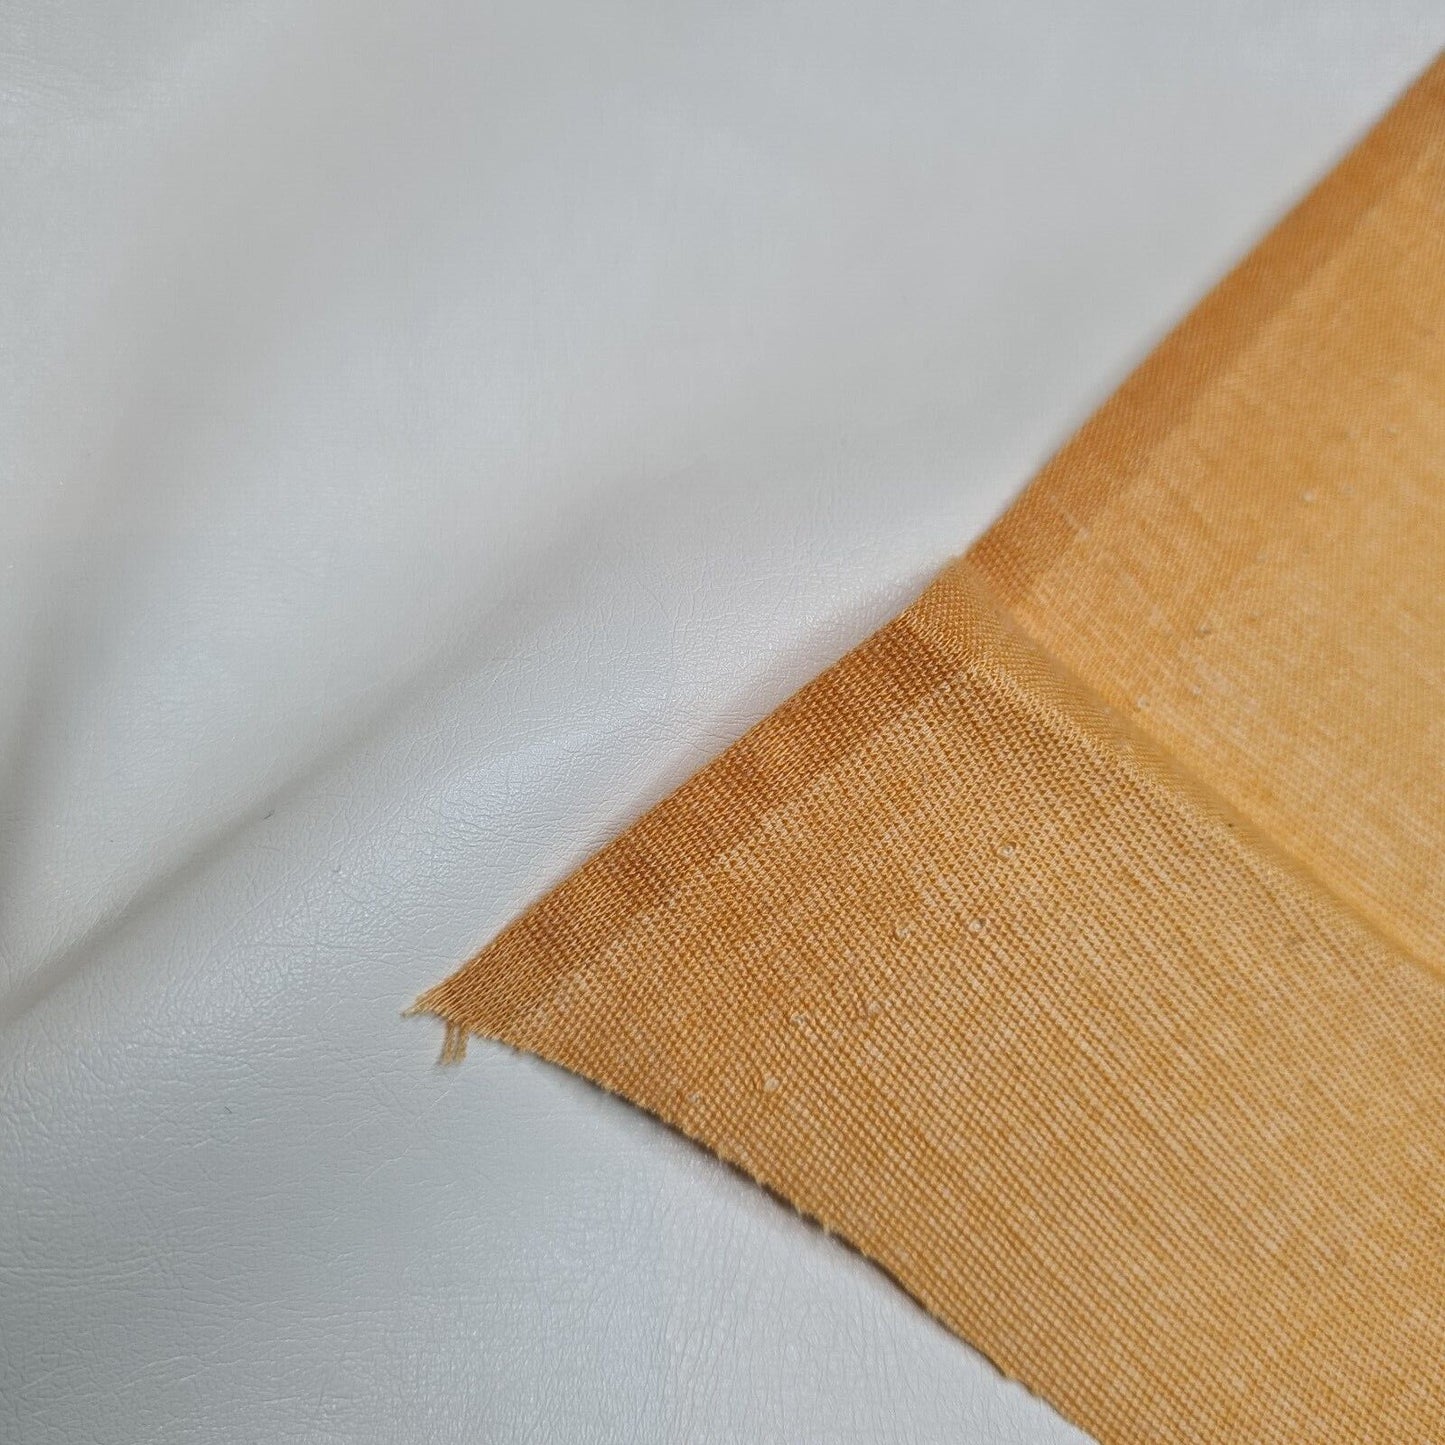 Pu Faux Leatherette Fabric Off White Colour Non Stretch 55" Wide